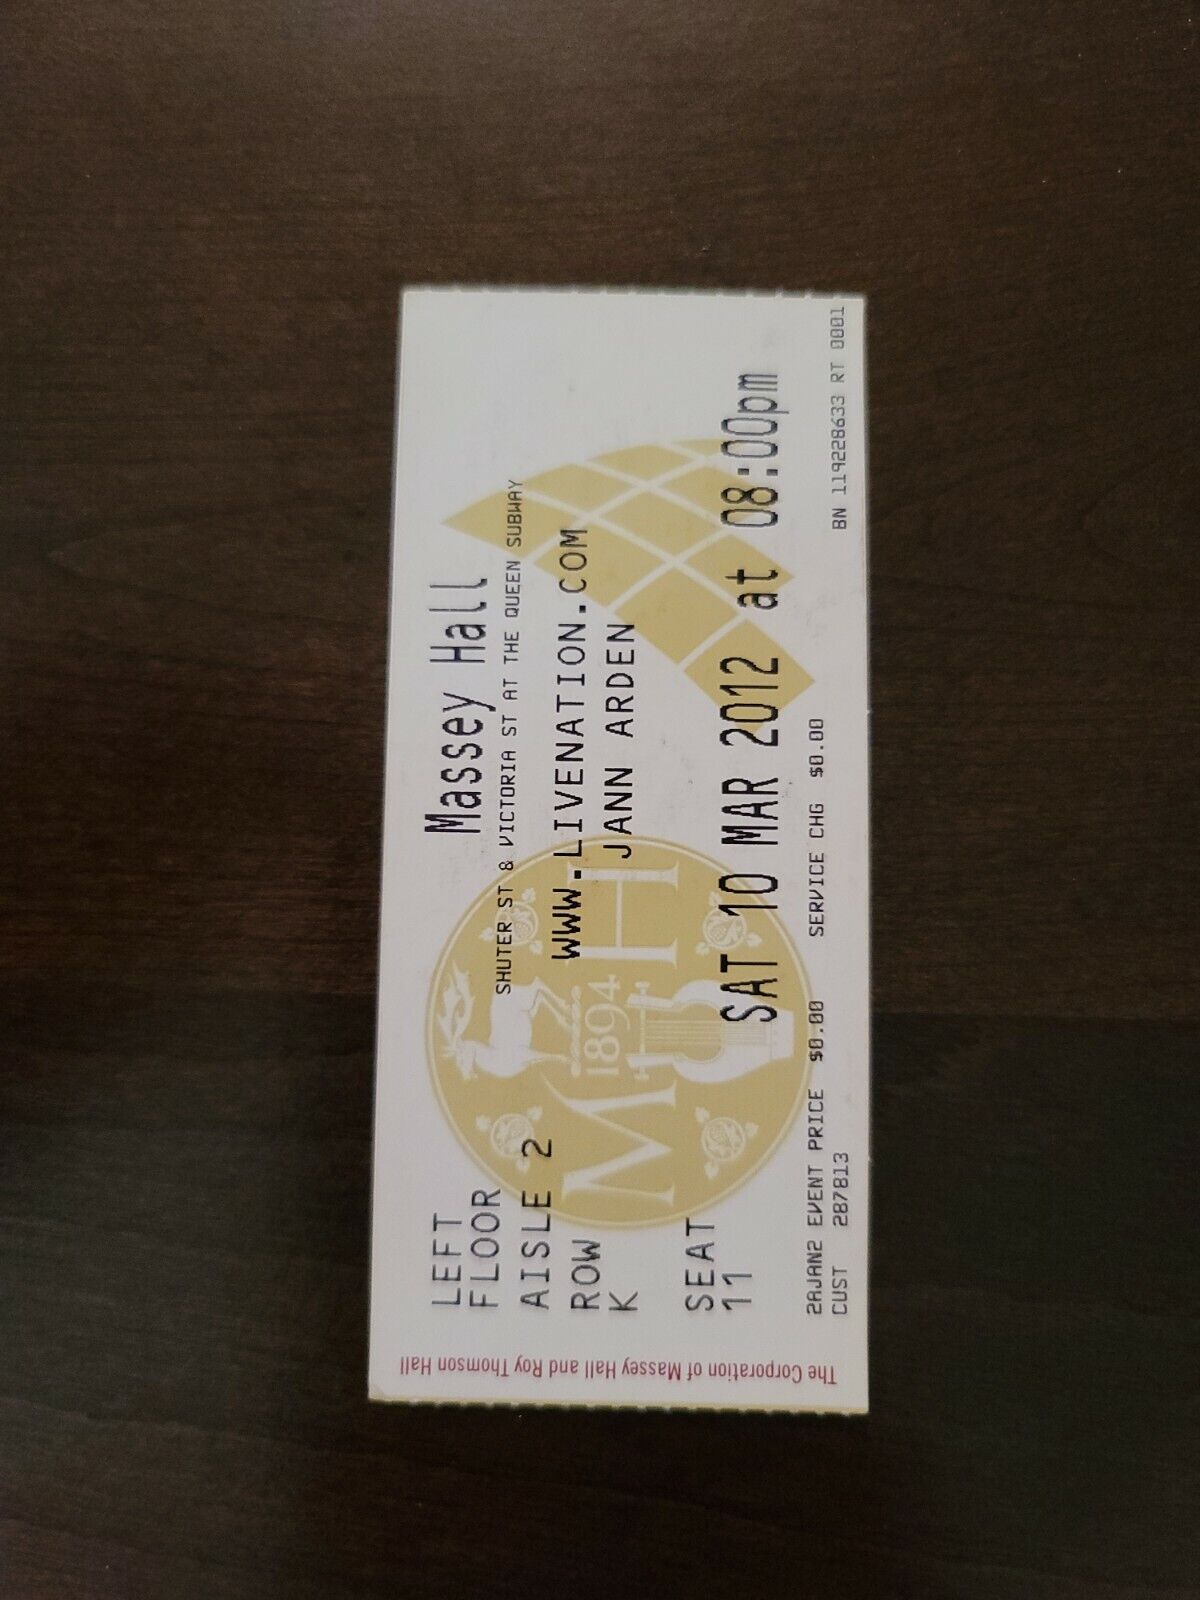 Jann Arden 2012, Toronto Massey Hall Original Concert Ticket Stub